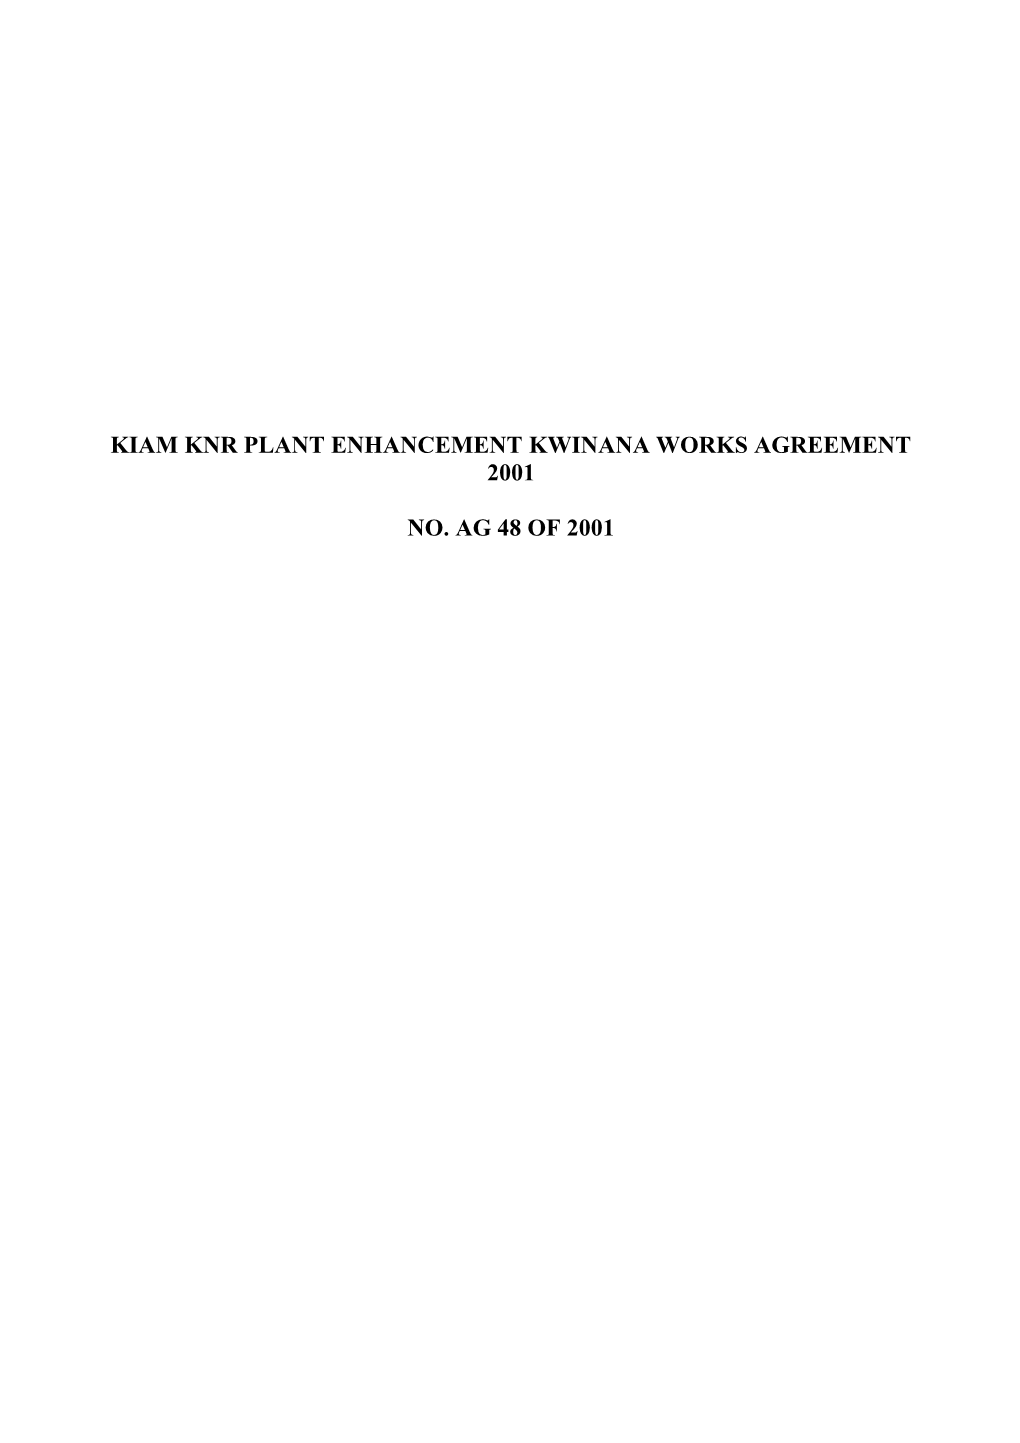 Kiam KNR Plant Enhancement Kwinana Works Agreement 2001